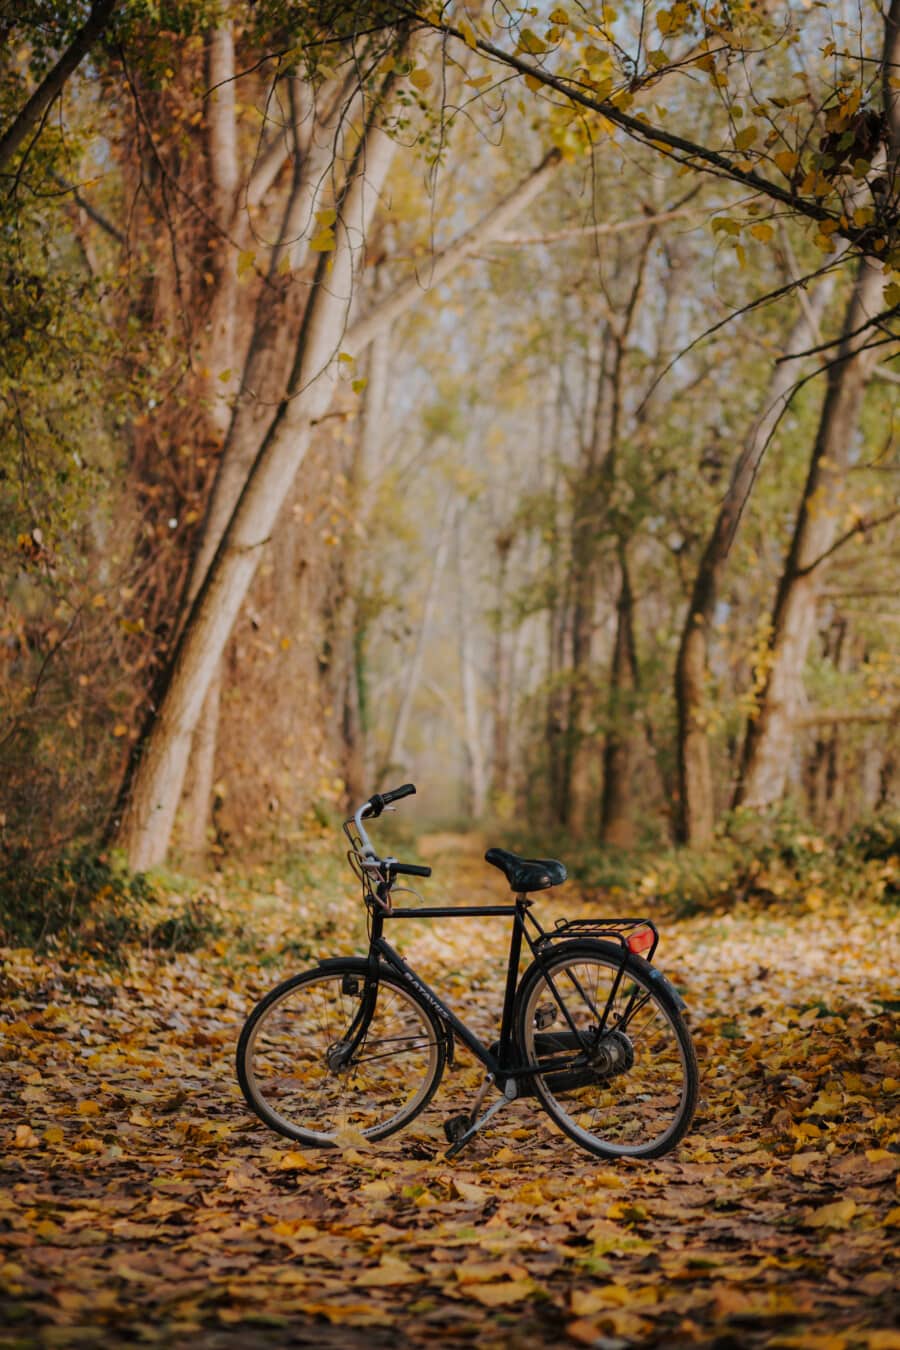 klassikko, sort, cykel, efterårssæsonen, skov, Forest trail, skovstien, blad, hjulet, natur